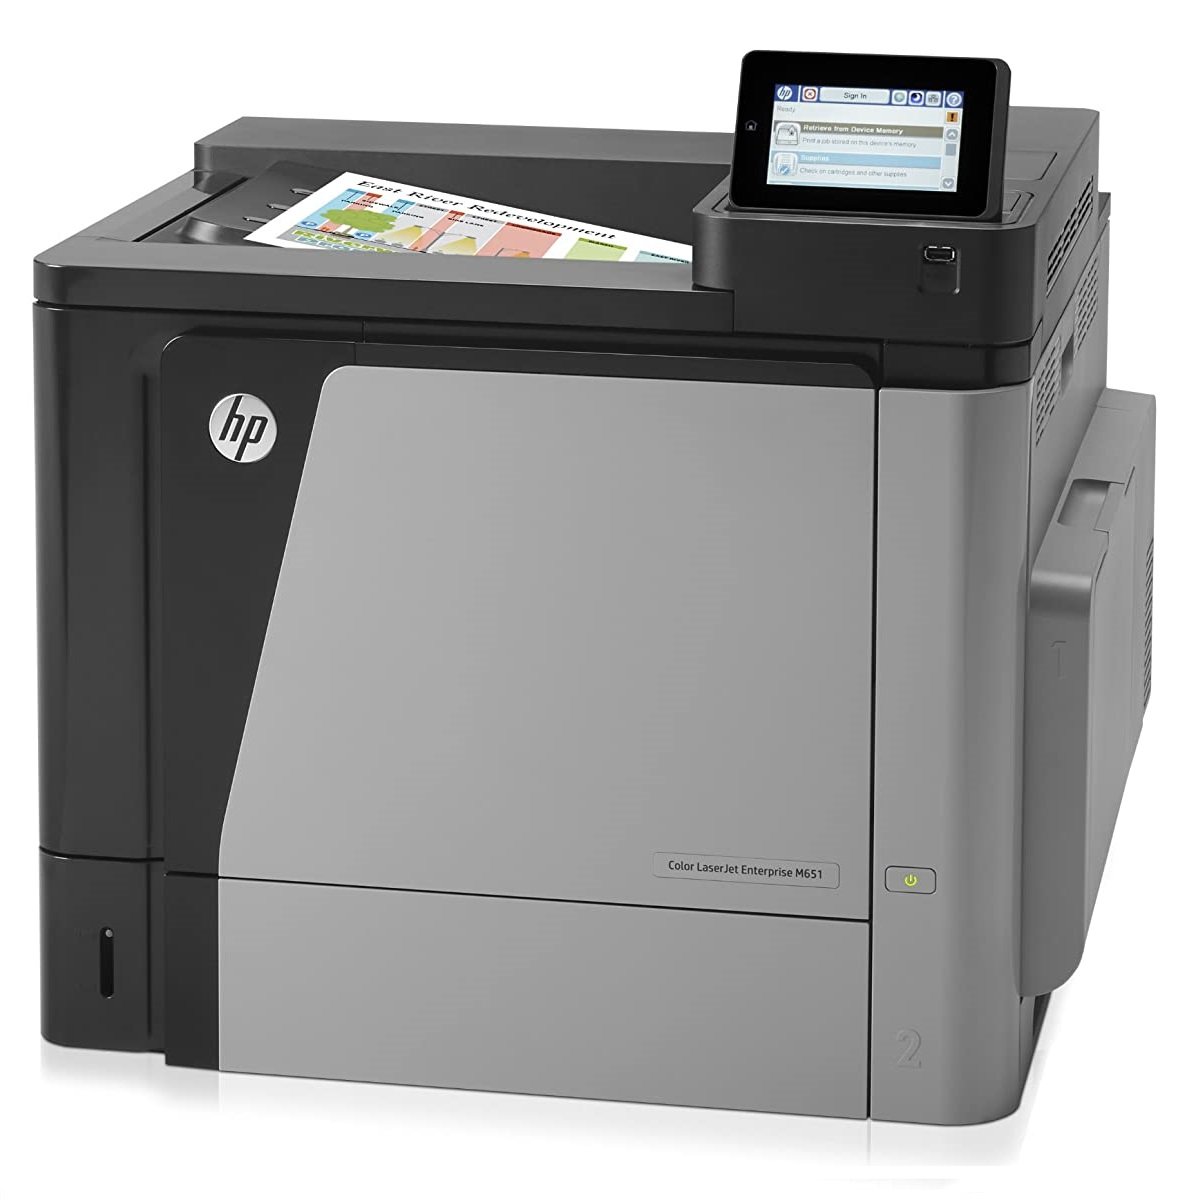 HP LaserJet Enterprise M651 Color Laser Office Printer (CZ256A) Duplex, Network, Fast & very economical For Office Use